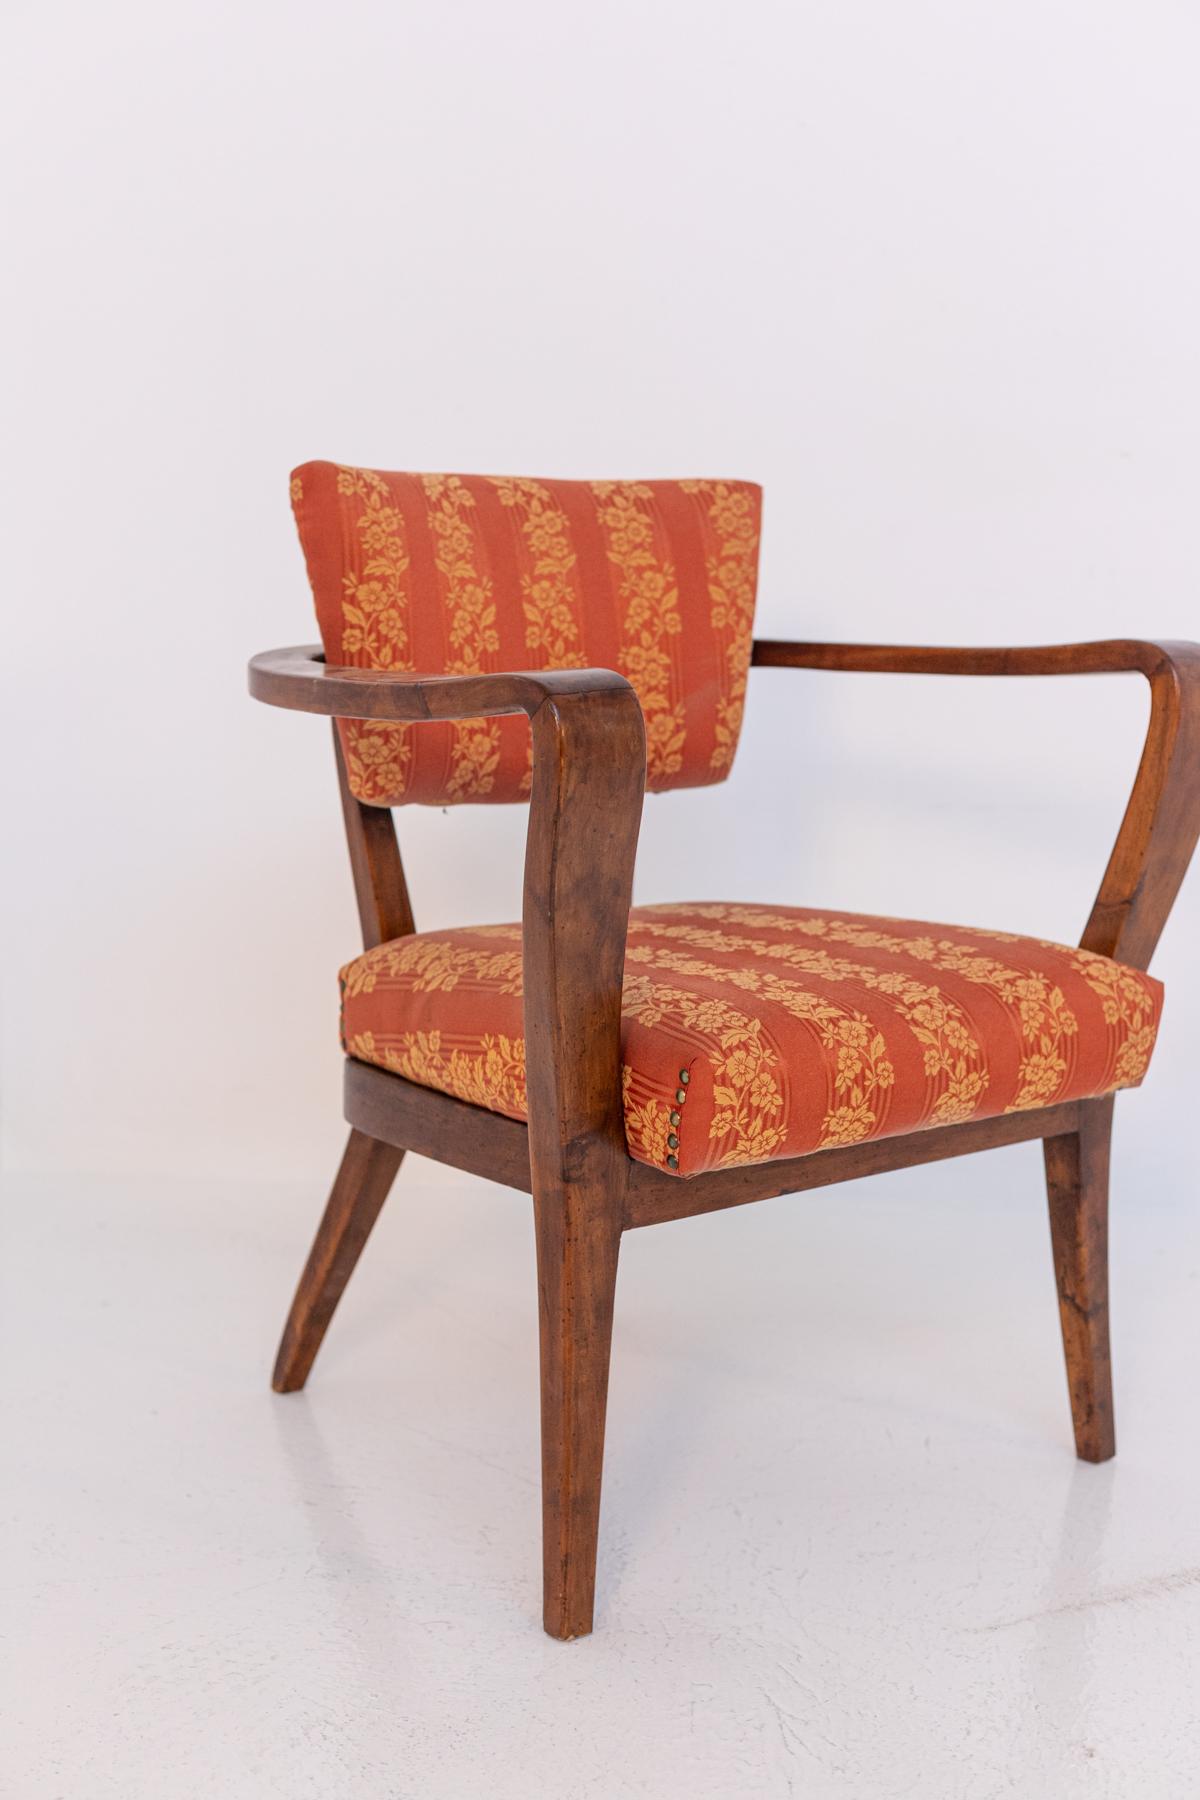 Mid-20th Century Italian Chair designed by Gio Ponti for Gastone Rinaldi, Published